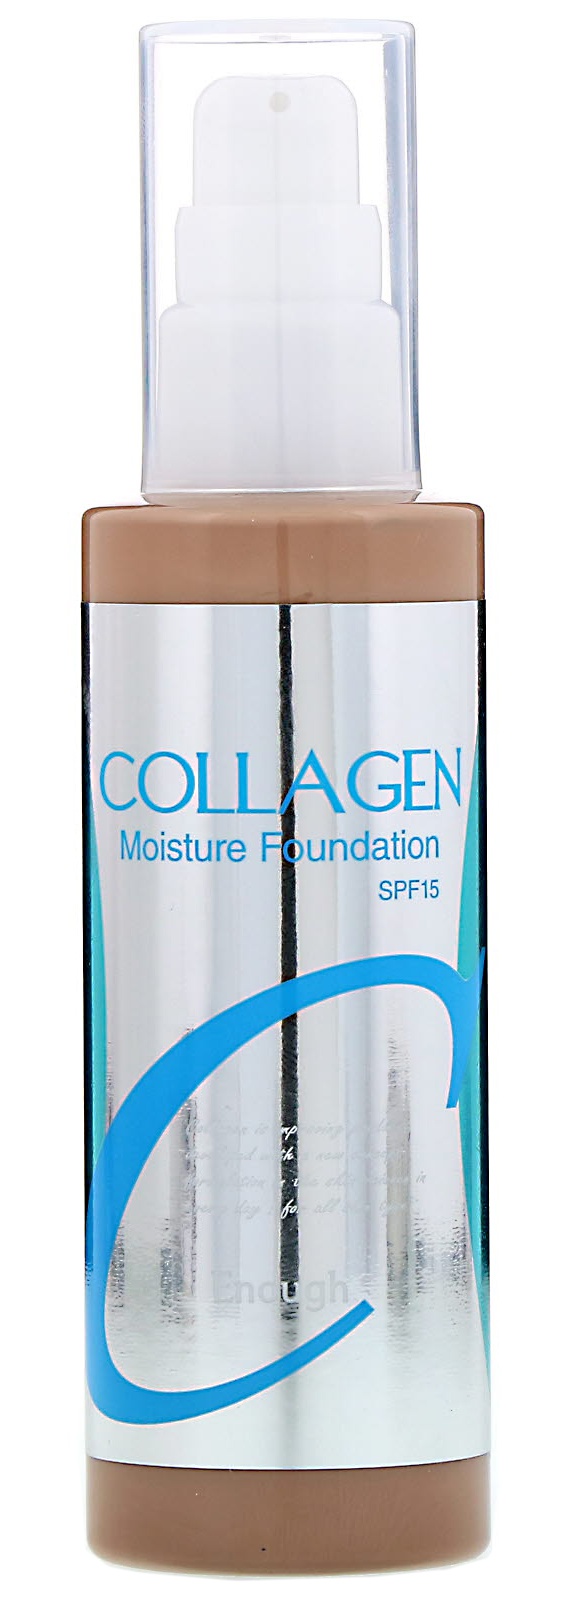 Enough Collagen, Moisture Foundation, SPF 15